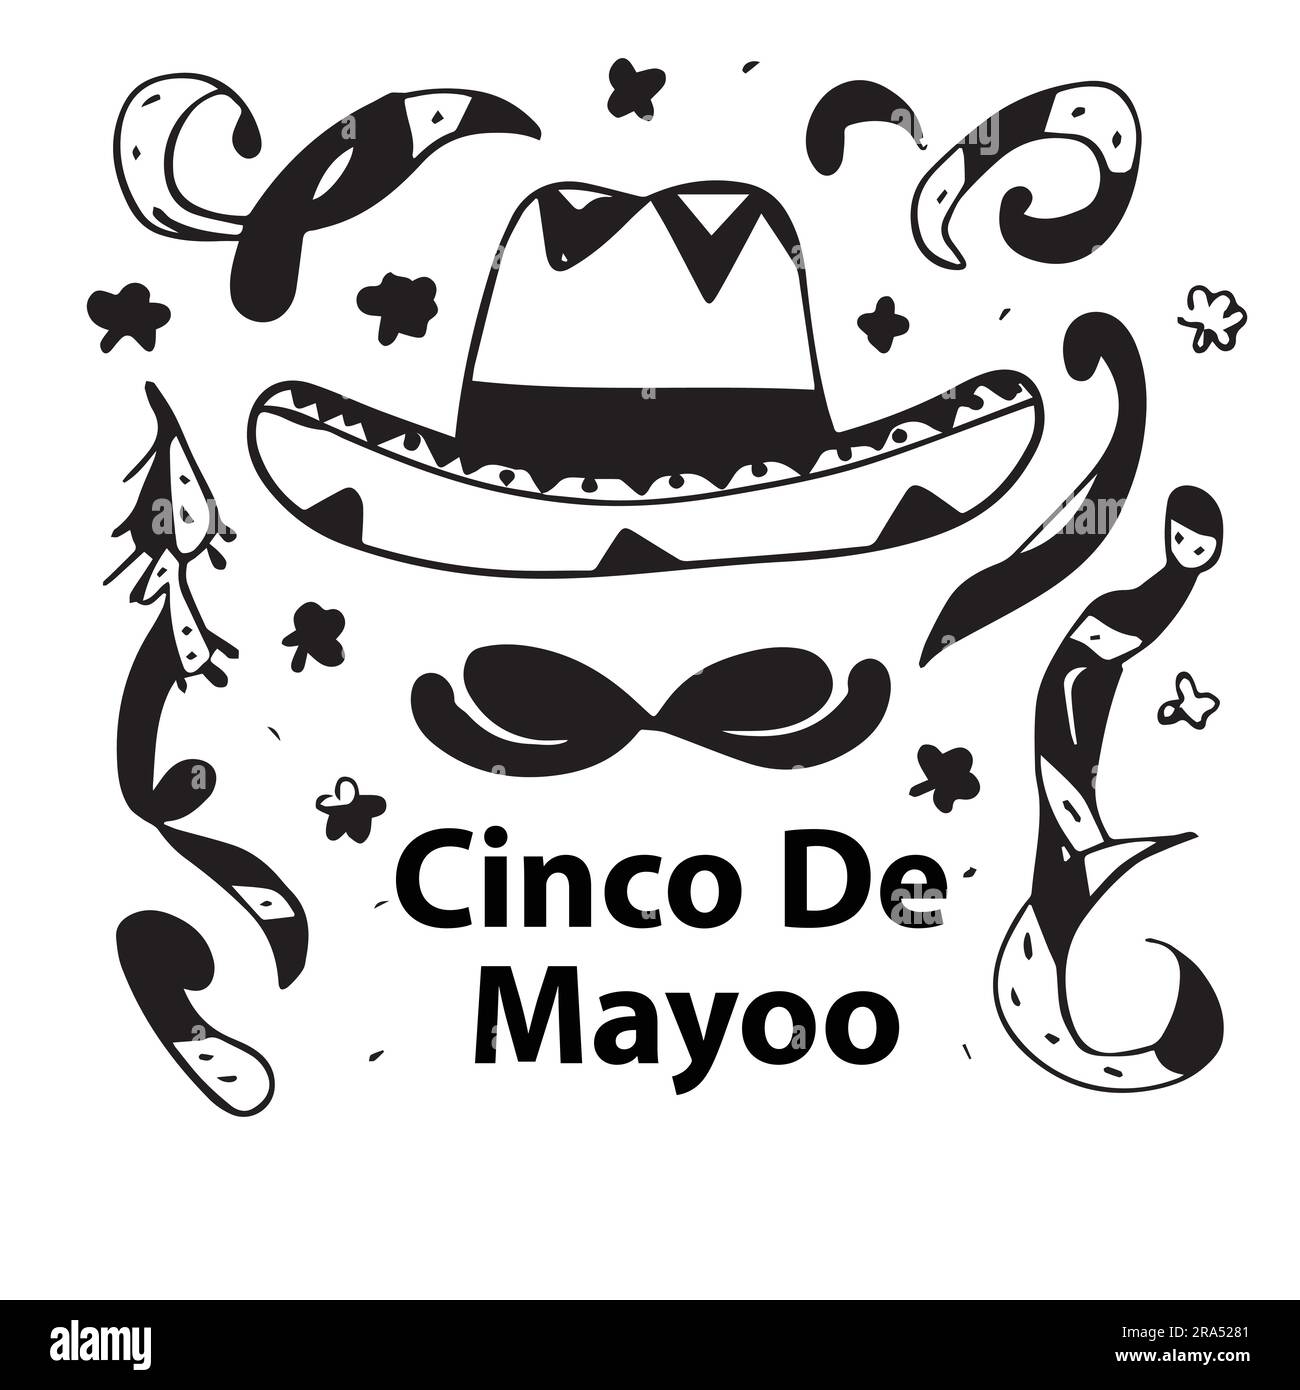 World Cinco De Mayoo Day Vector illustration Stock Vector